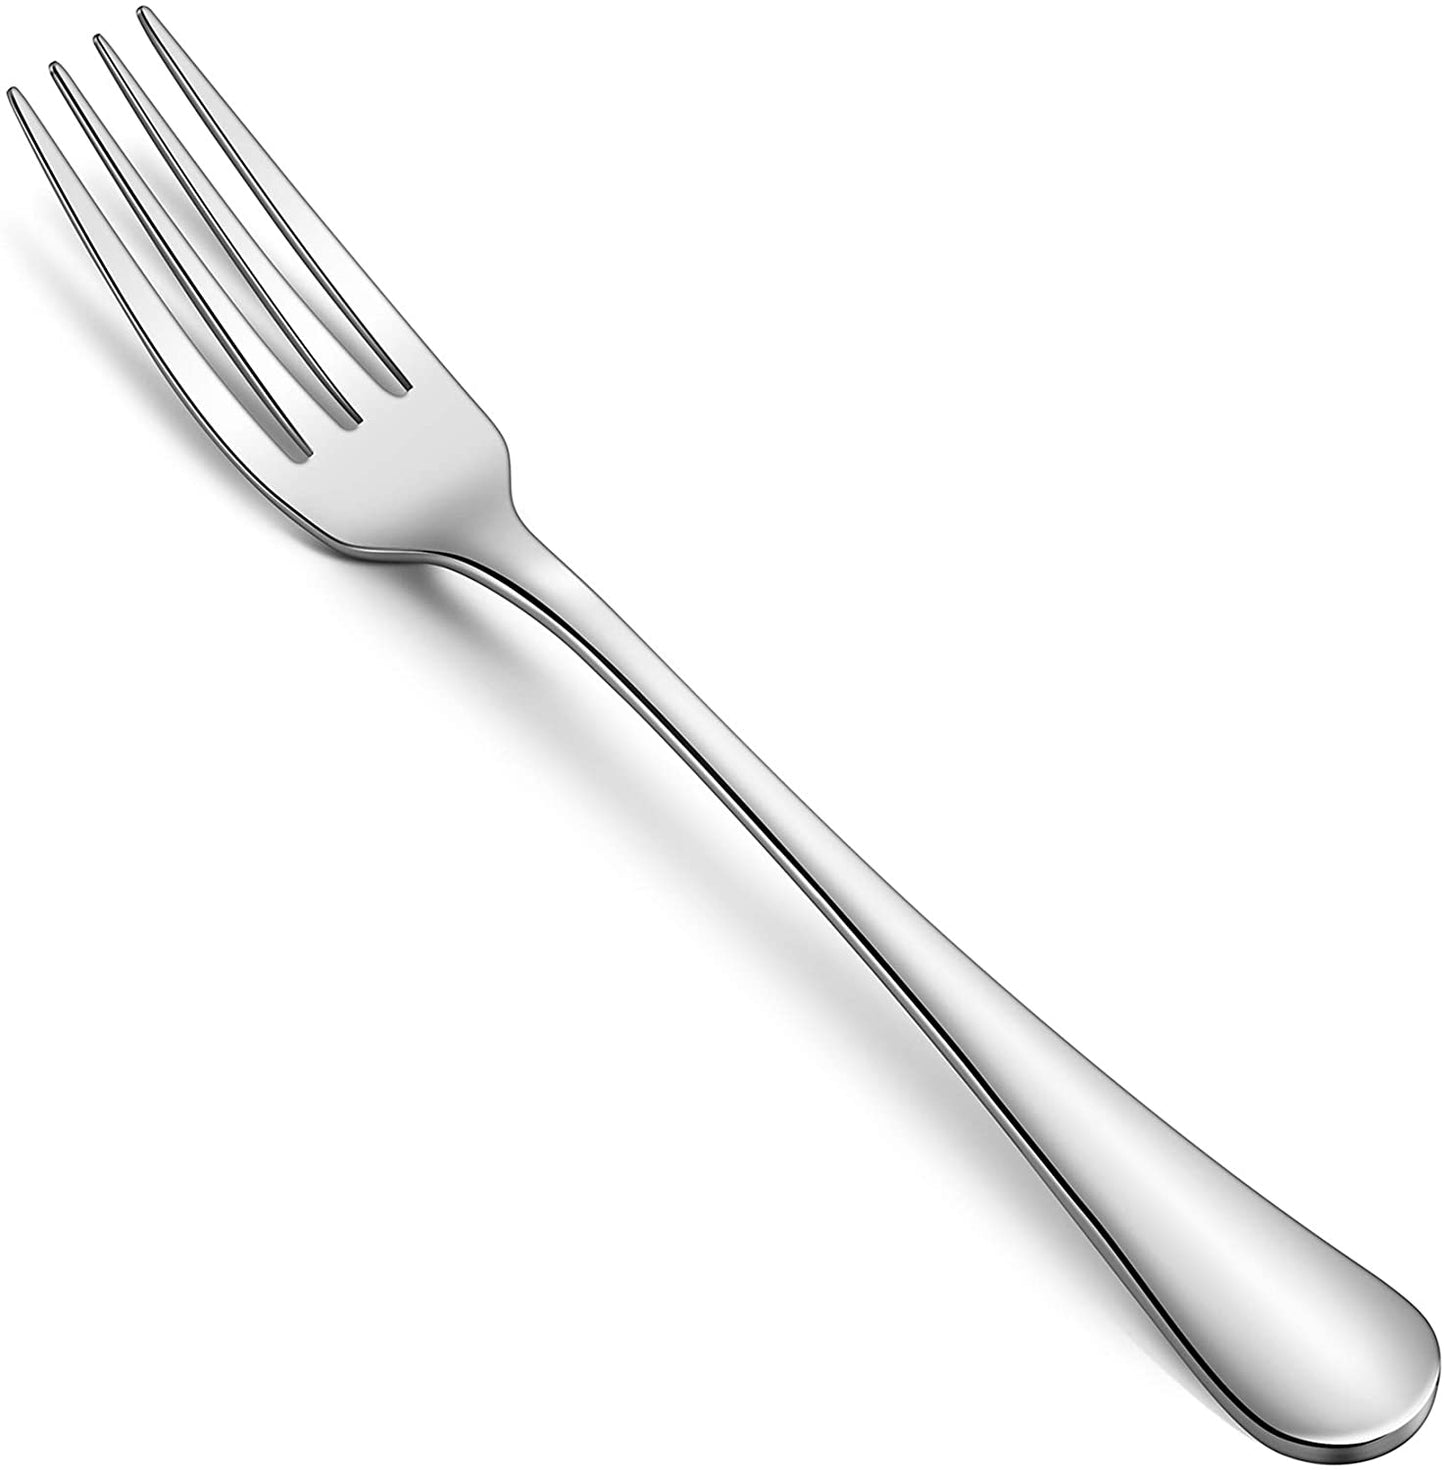 MFW 12-Piece Dinner Forks Set, Food-Grade Stainless Steel Cutlery Forks, Mirror Polished, Dishwasher Safe - 8 Inch